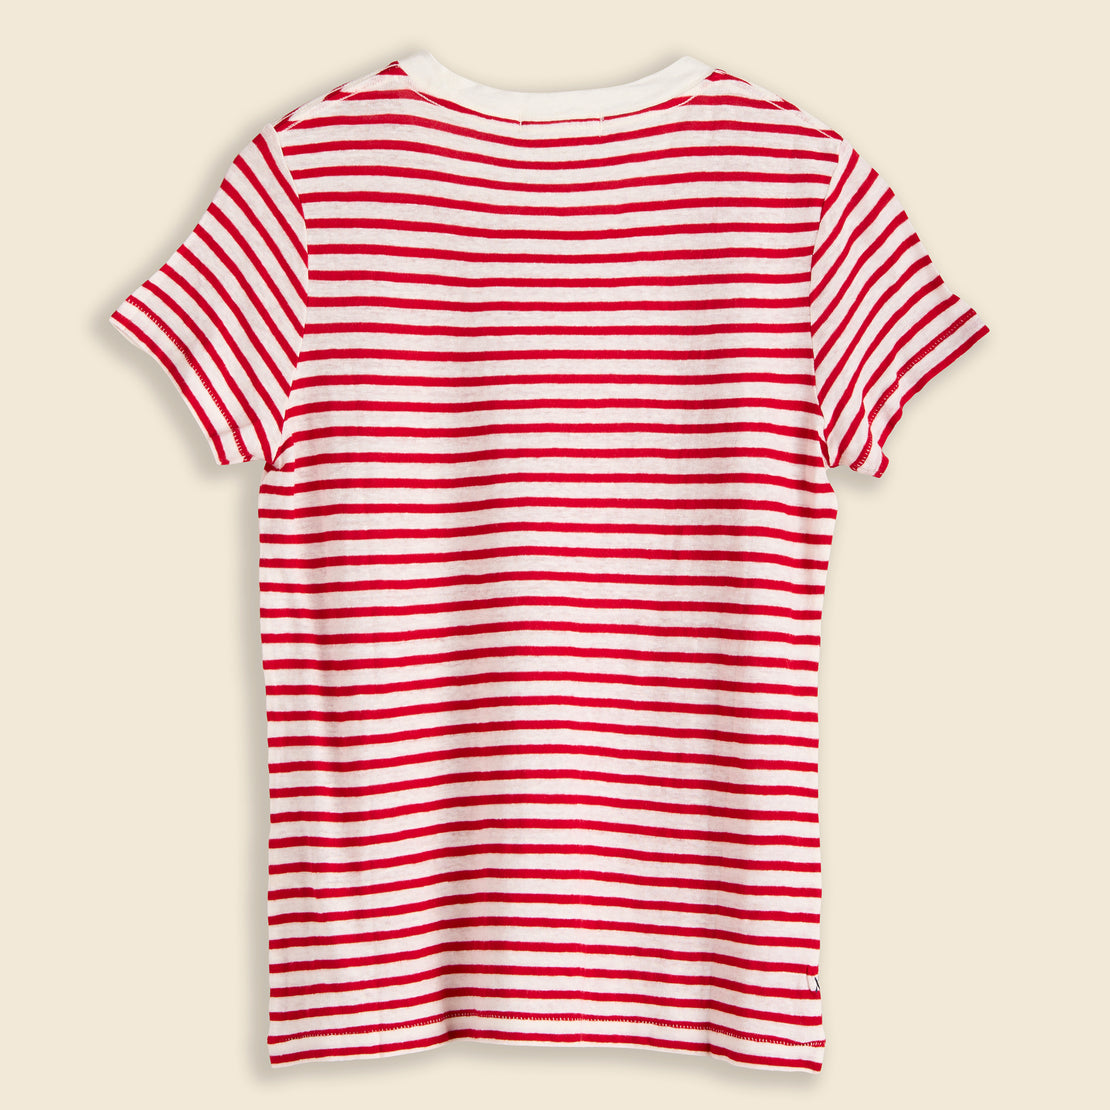 Prospect Linen Tee in Stripe - Red/White Stripe